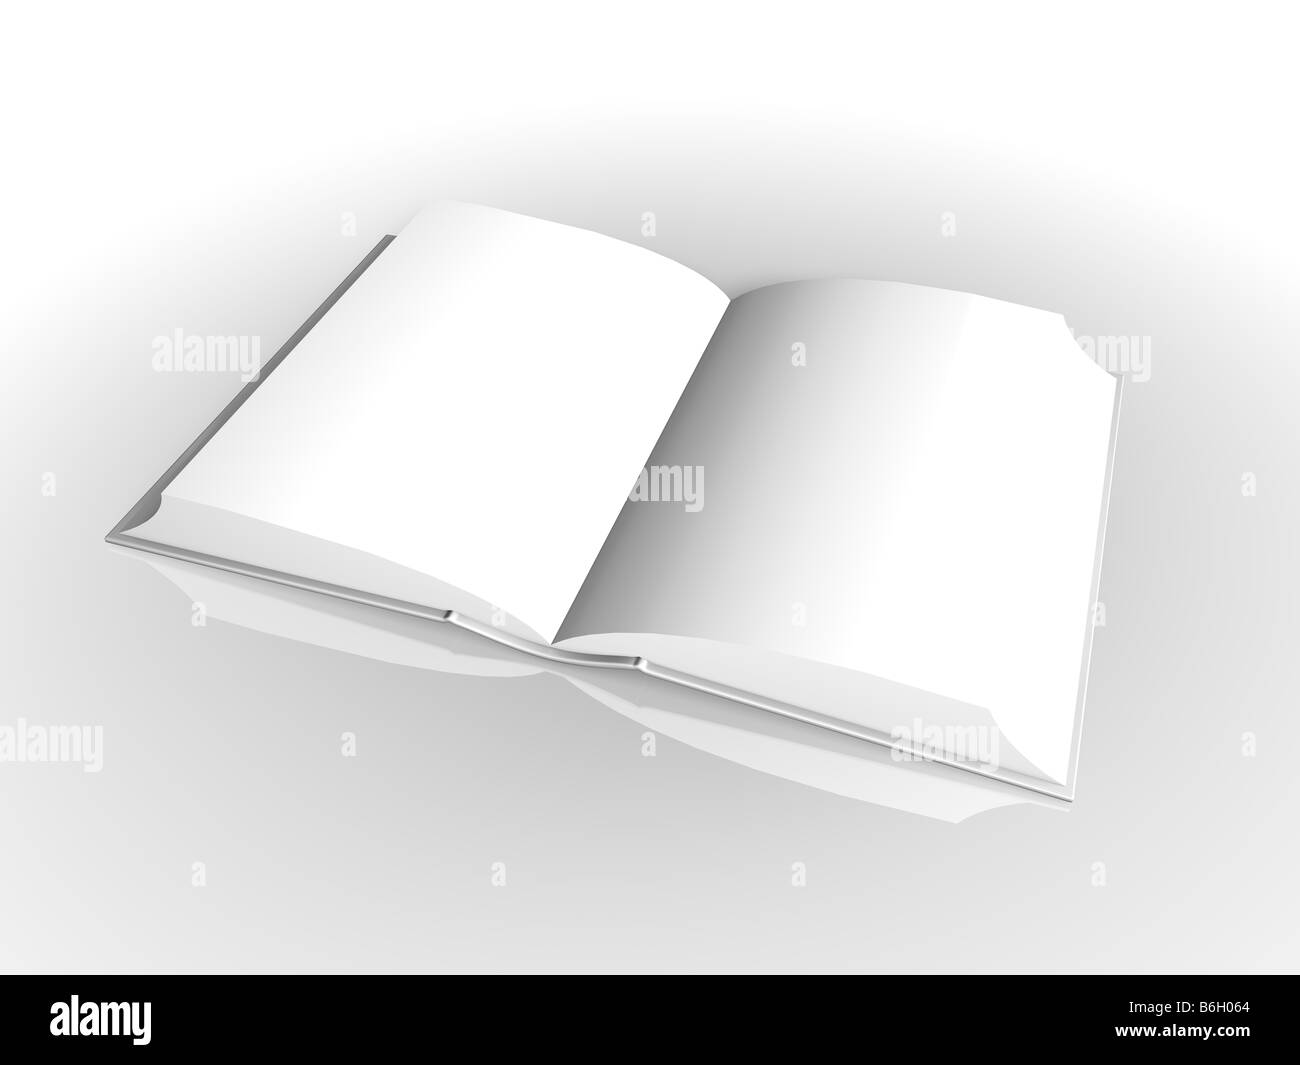 Books on isolated white background Stock Photo